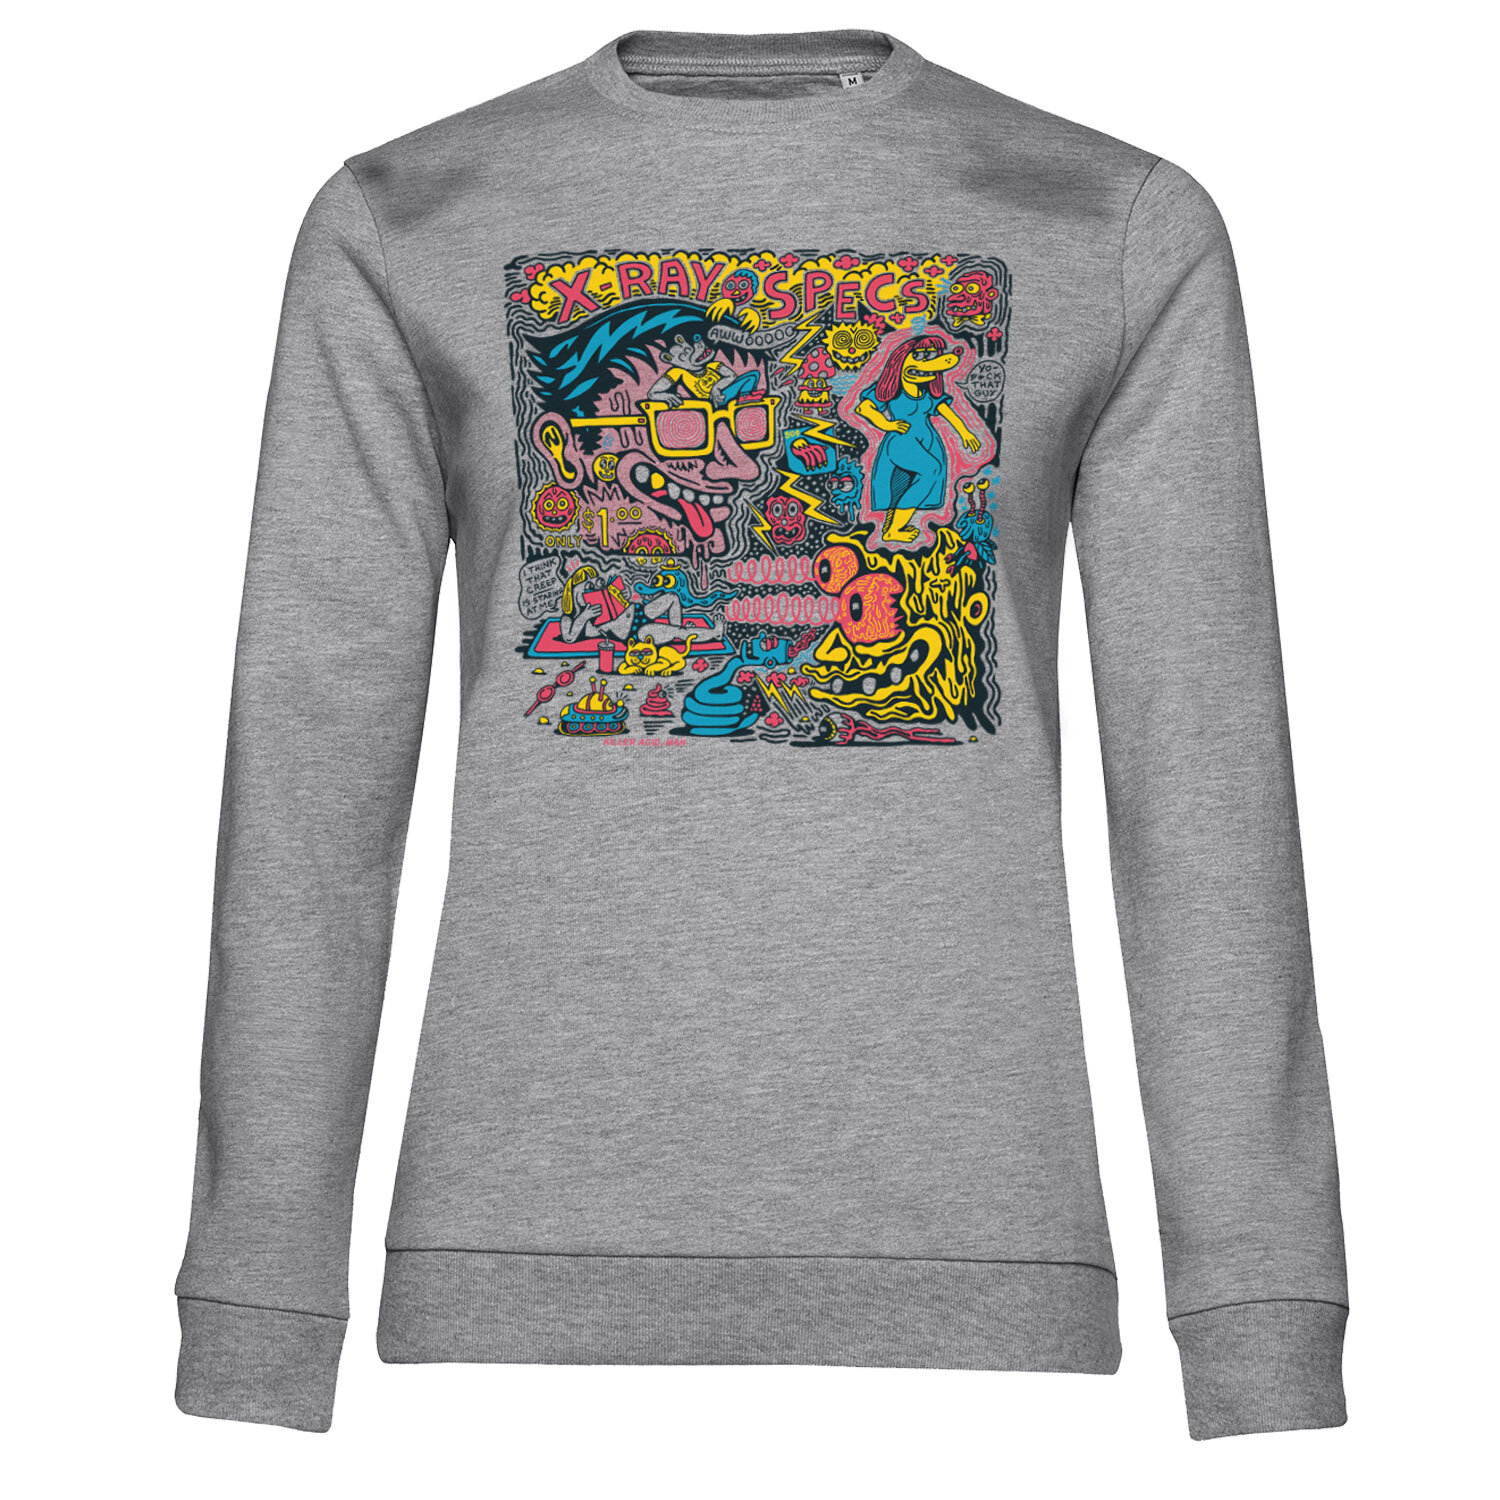 Killer Acid - X-Ray Specs Girly Sweatshirt